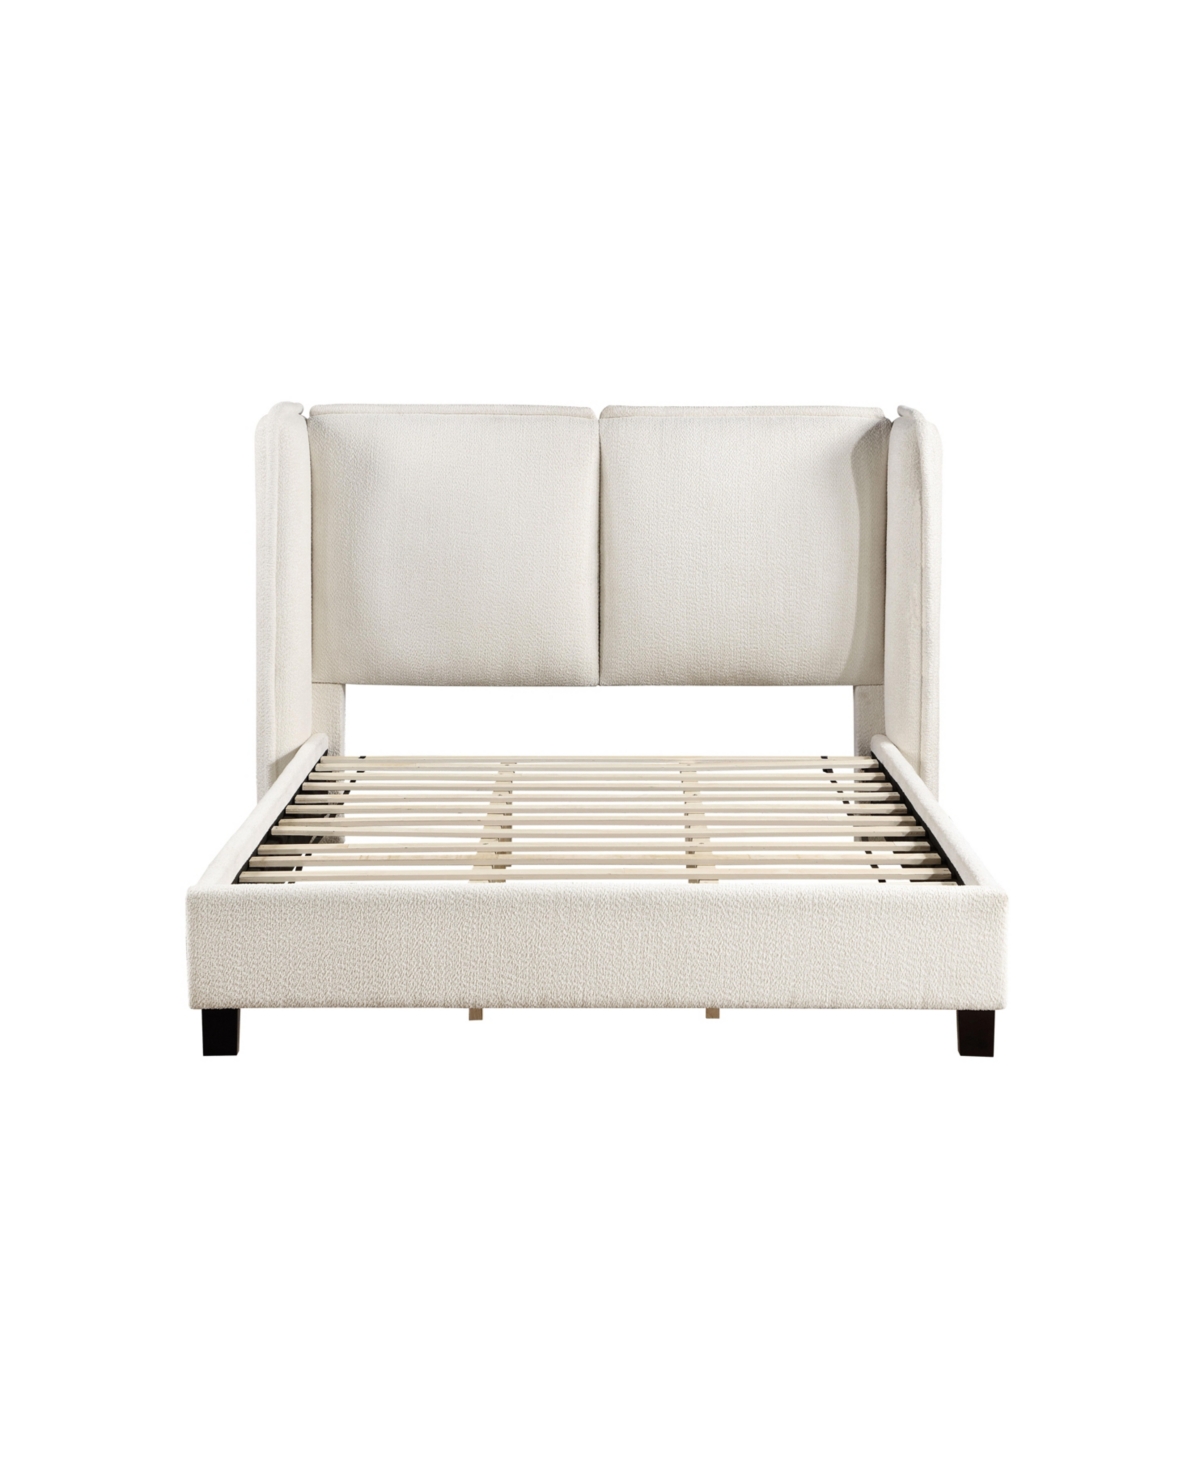 Furniture Of America Haydan Boucle Upholstered Queen Bed In Beige